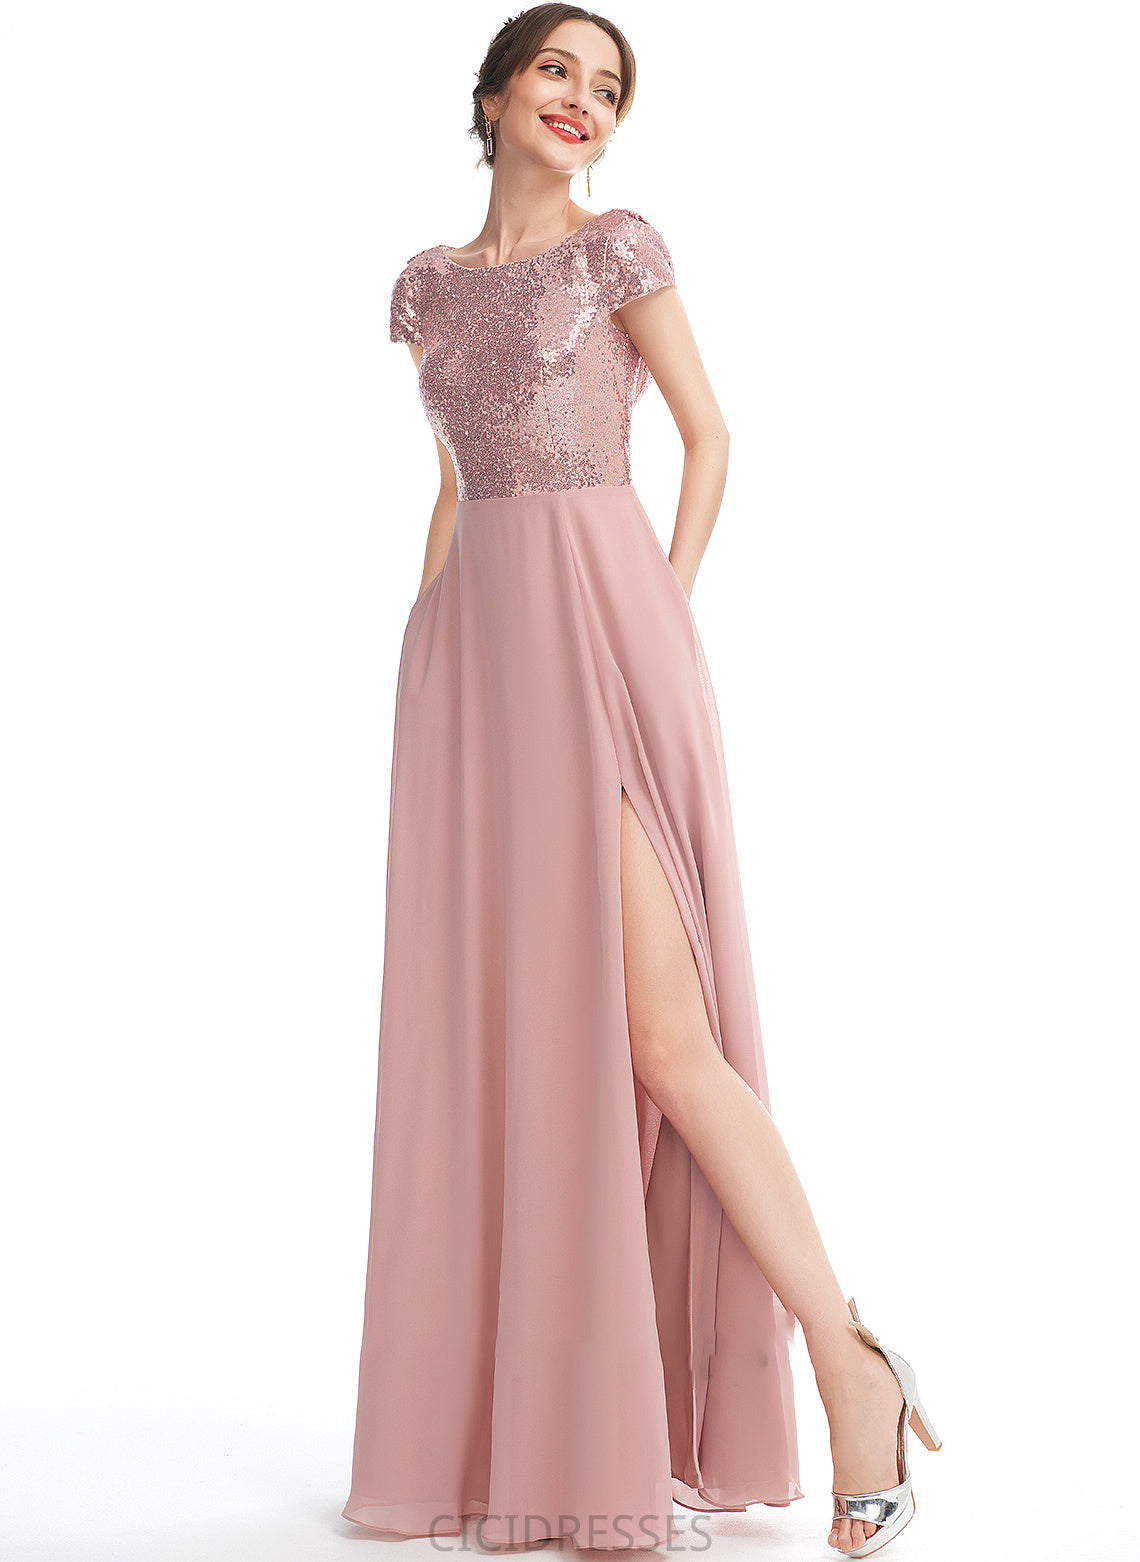 Silhouette A-Line Fabric Sequins Floor-Length Neckline Length SplitFront Embellishment ScoopNeck Emilia Sleeveless Bridesmaid Dresses